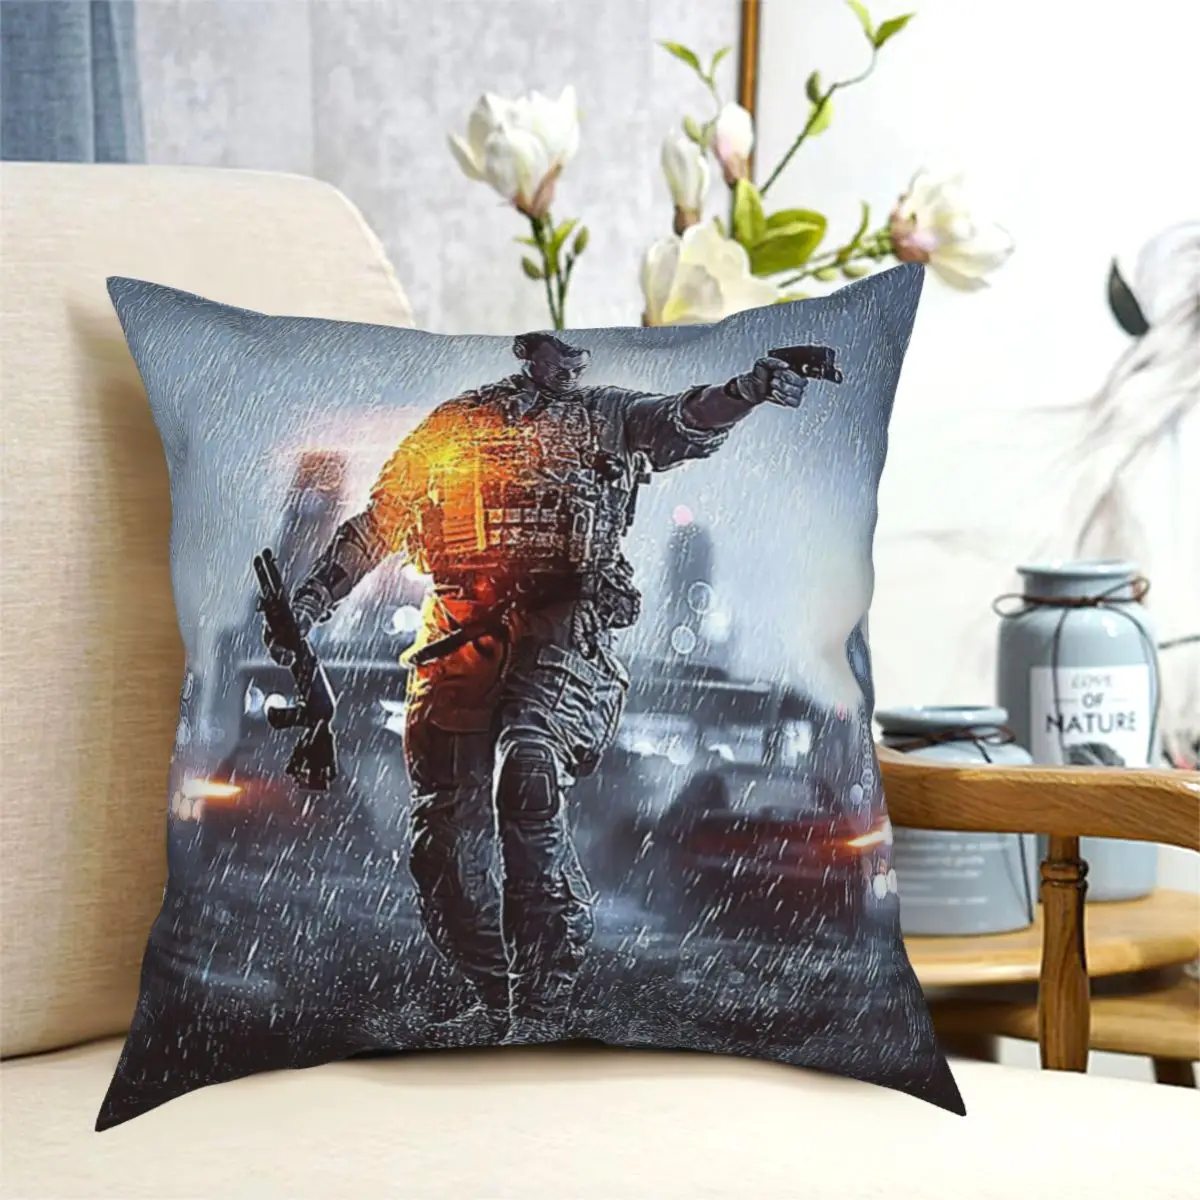 

Battlefield 4 Lone Soldier Gaming Throw Pillow Cushion Cover Decorative Pillowcases Case Home Sofa Cushions 40x40,45x45cm